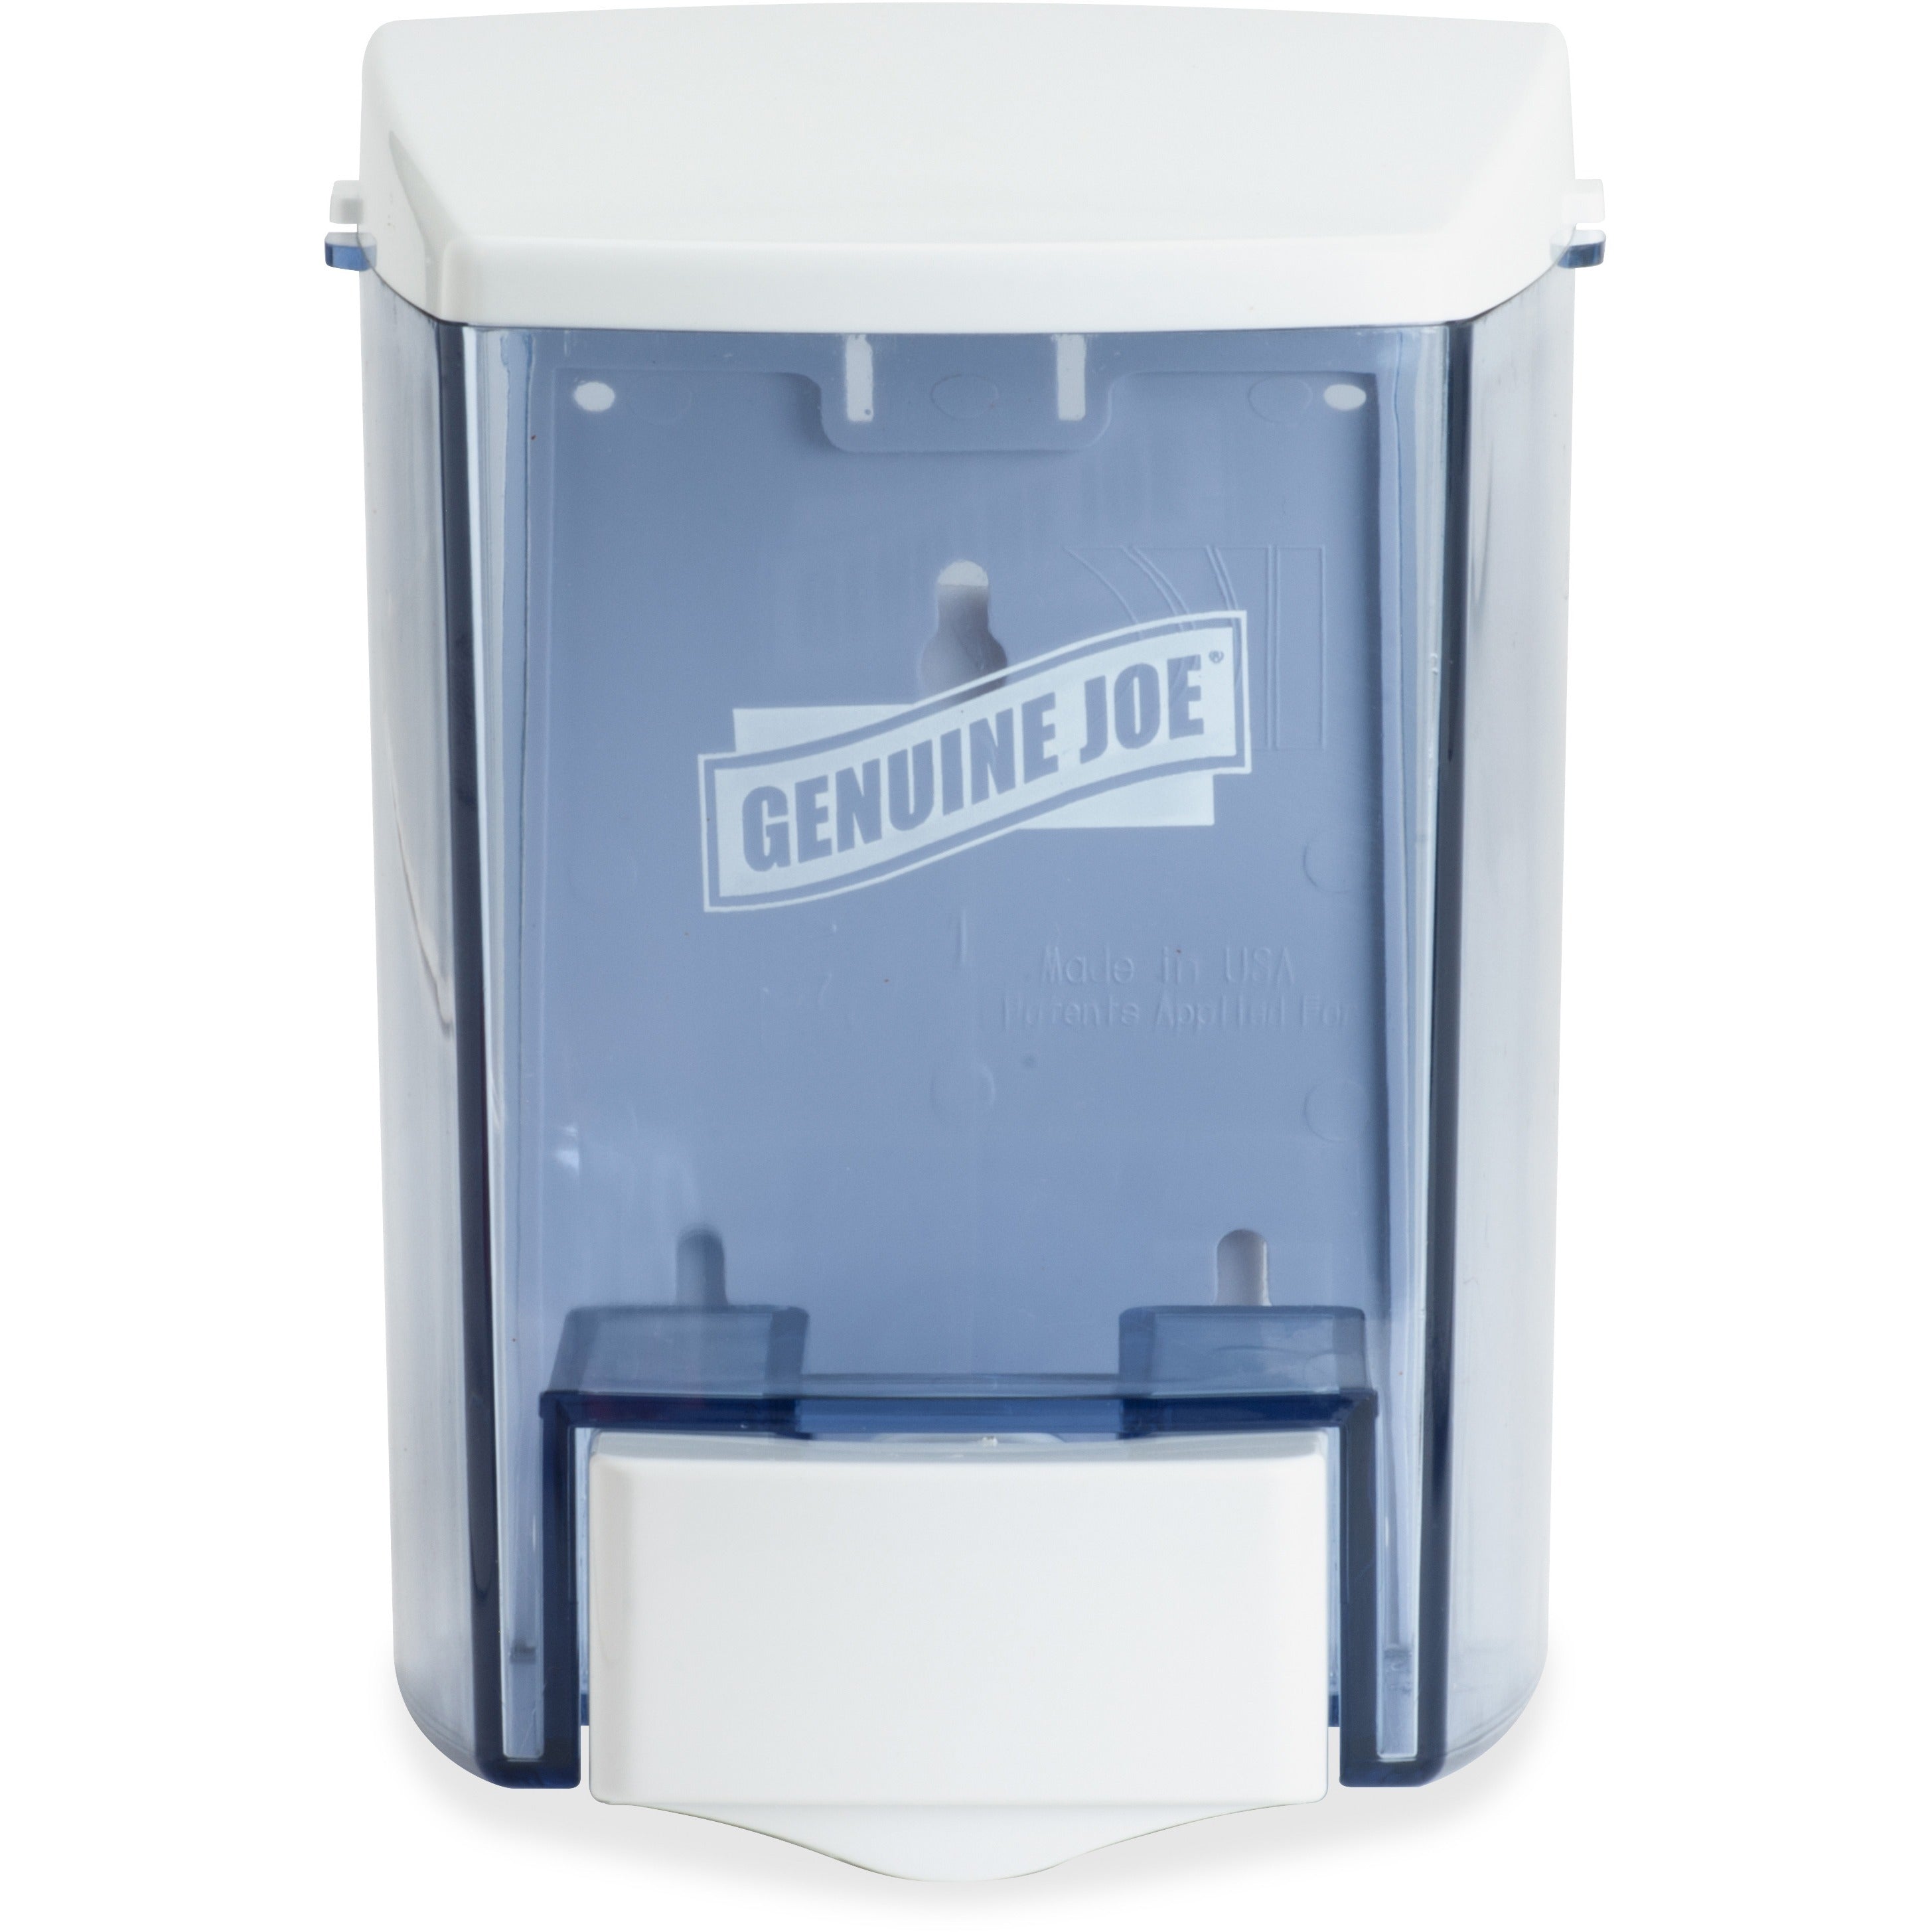 genuine-joe-30-oz-soap-dispenser-manual-30-fl-oz-capacity-see-through-tank-water-resistant-soft-push-1each_gjo29425 - 2